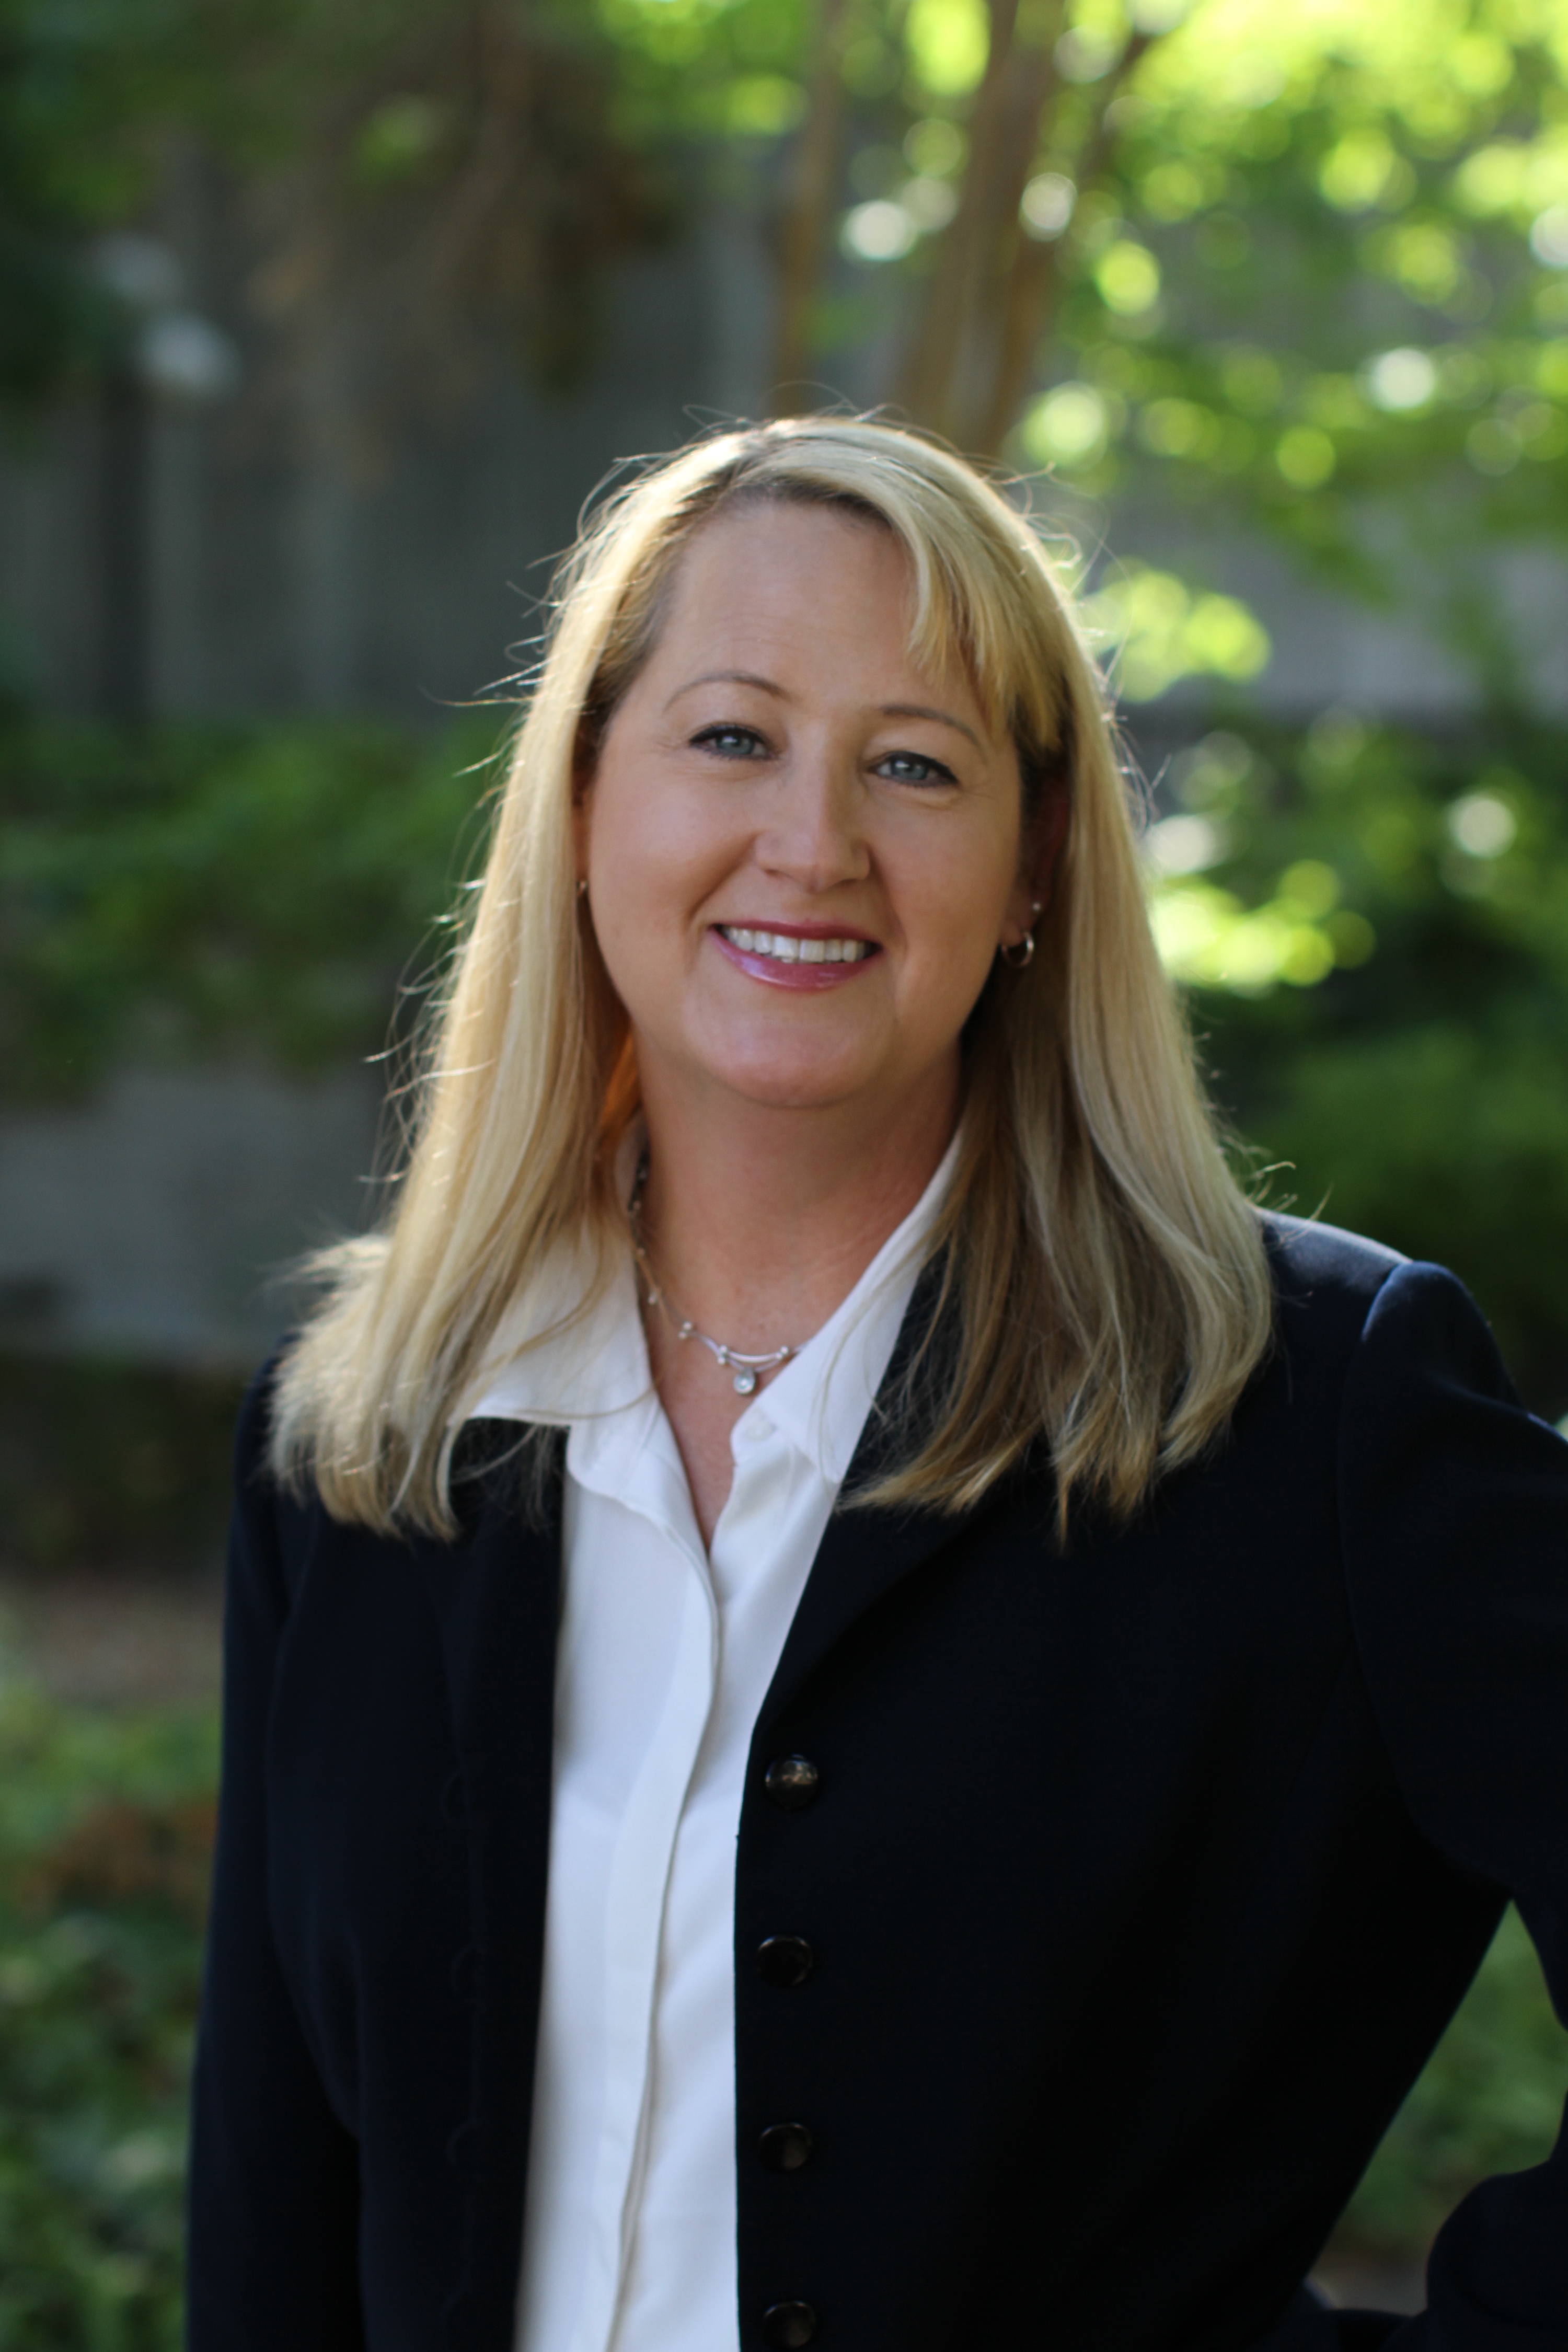 Headshot of Tammy Kenber, new CHRO for UC Davis and UC Davis Health